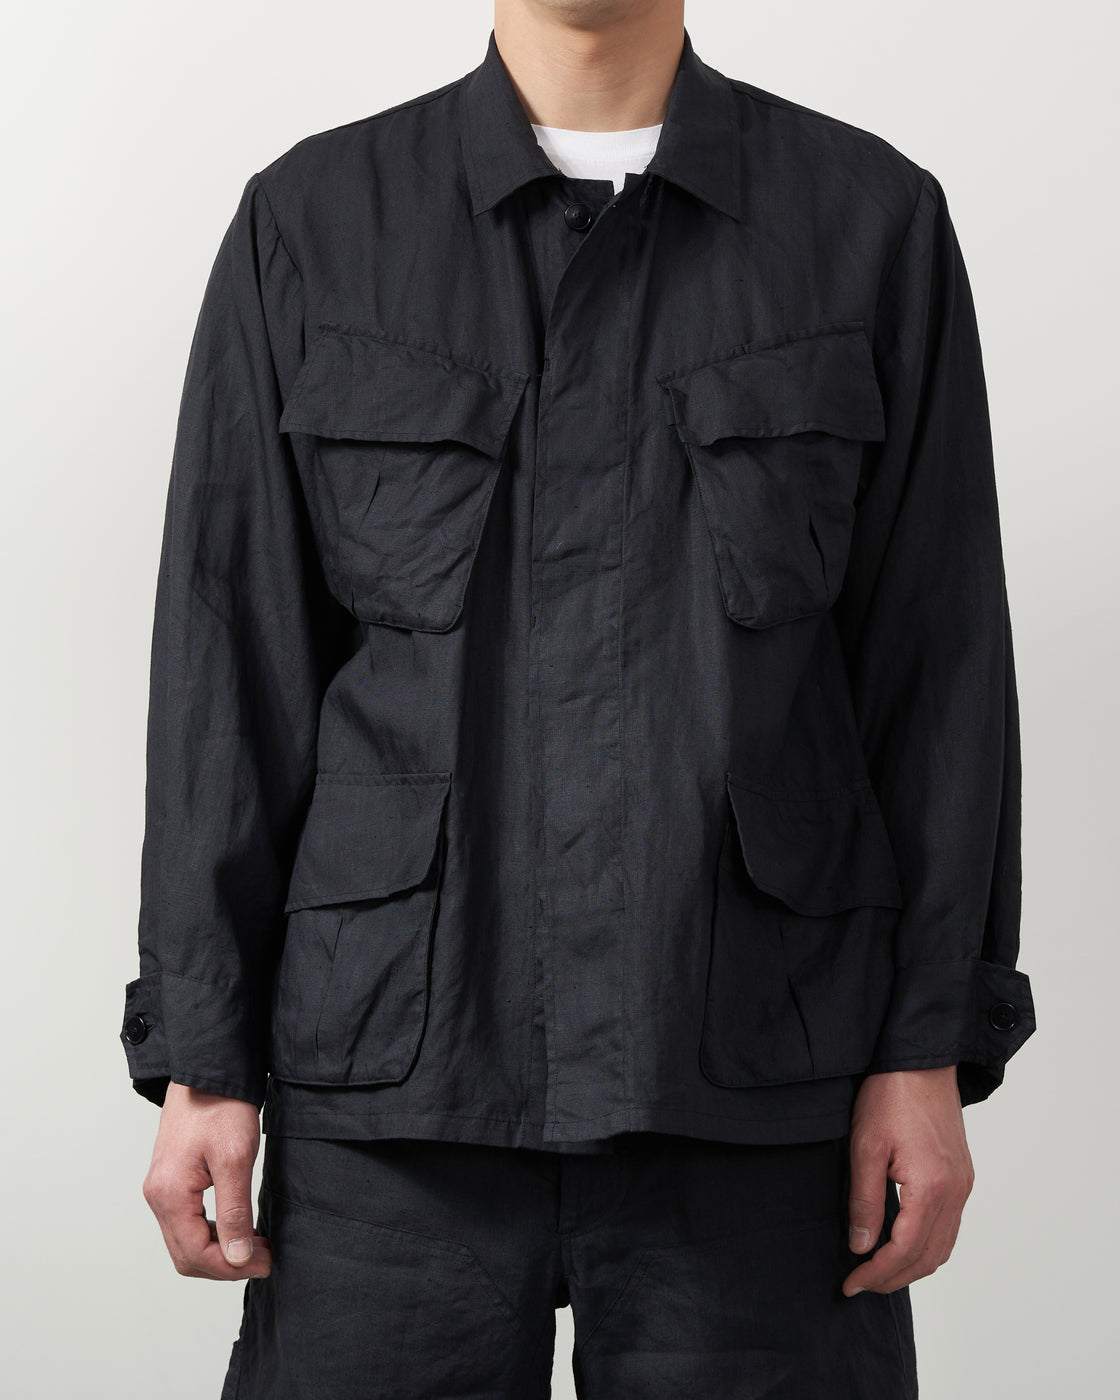 SH FTGJ-004 Fatigue Shirt (Linen Garment Dye), Ink Black